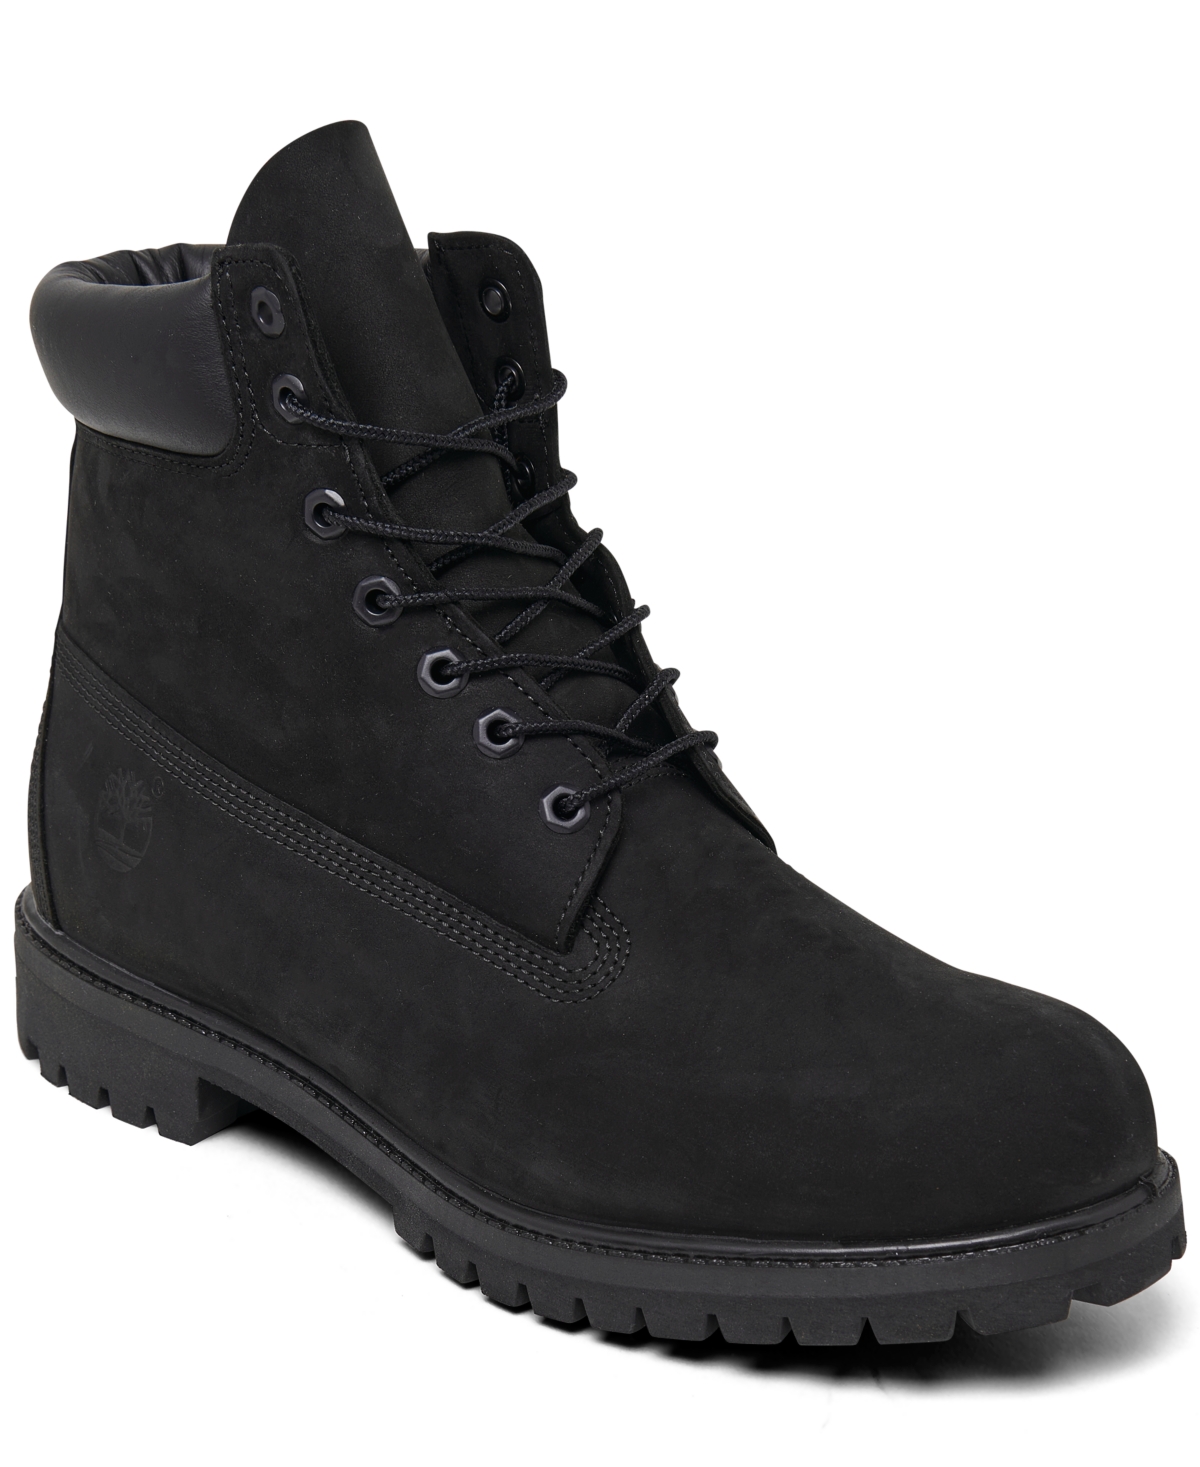 Men's 6 Inch Premium Waterproof Boots from Finish Line - Black